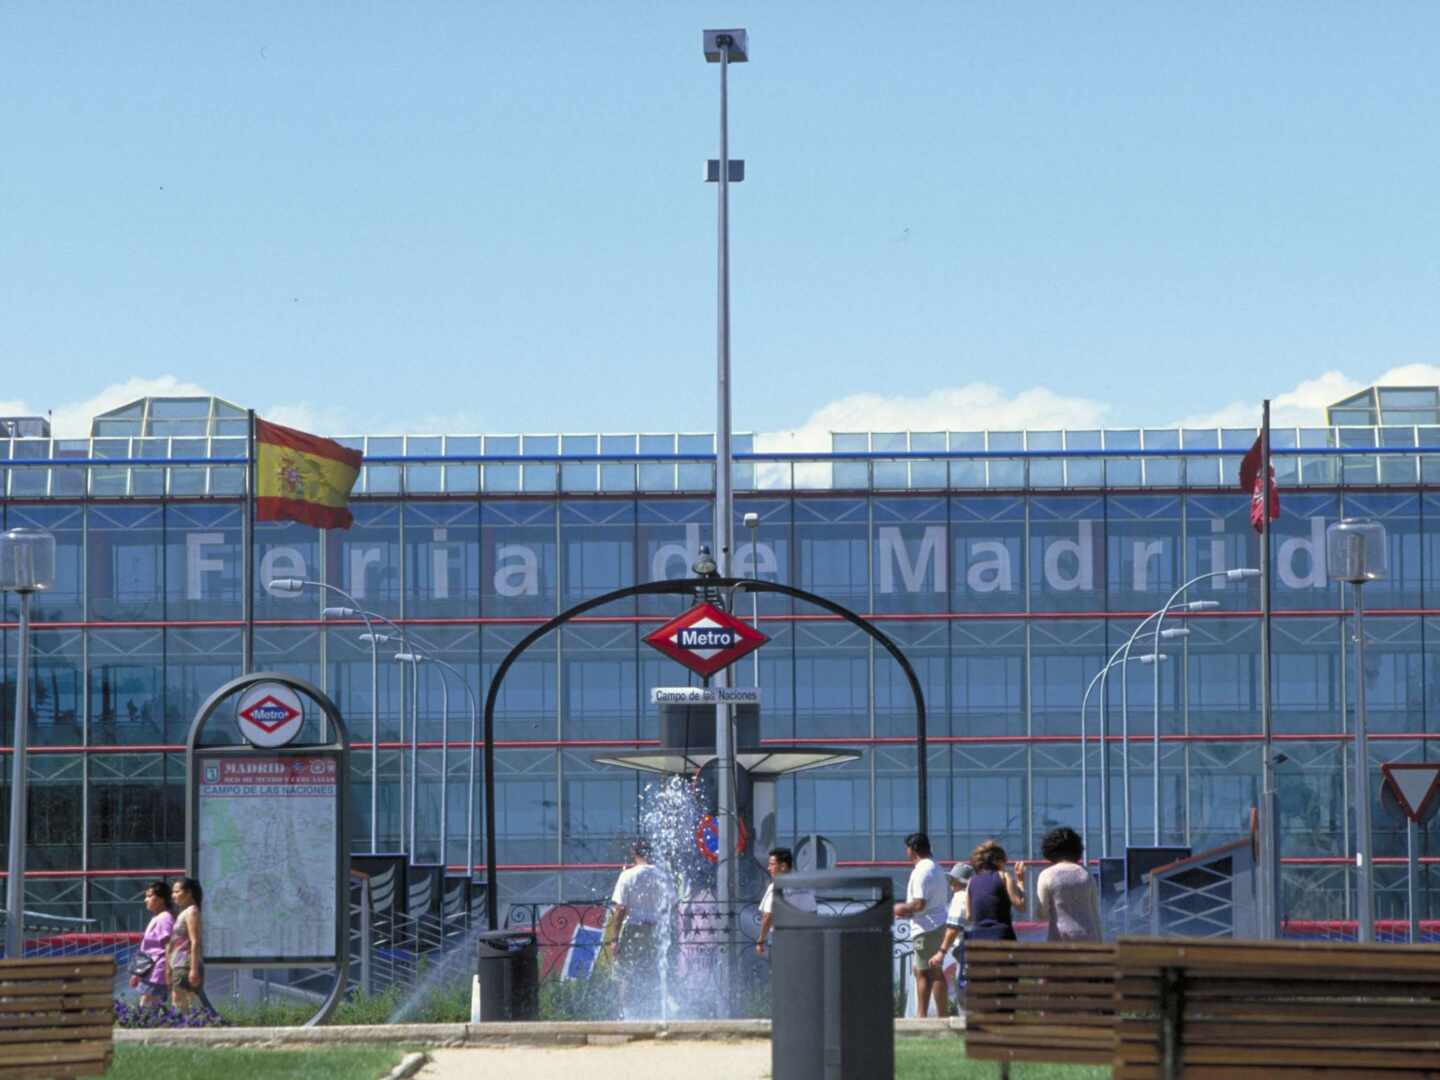 Entrada principal de la Feria de Madrid (Ifema).